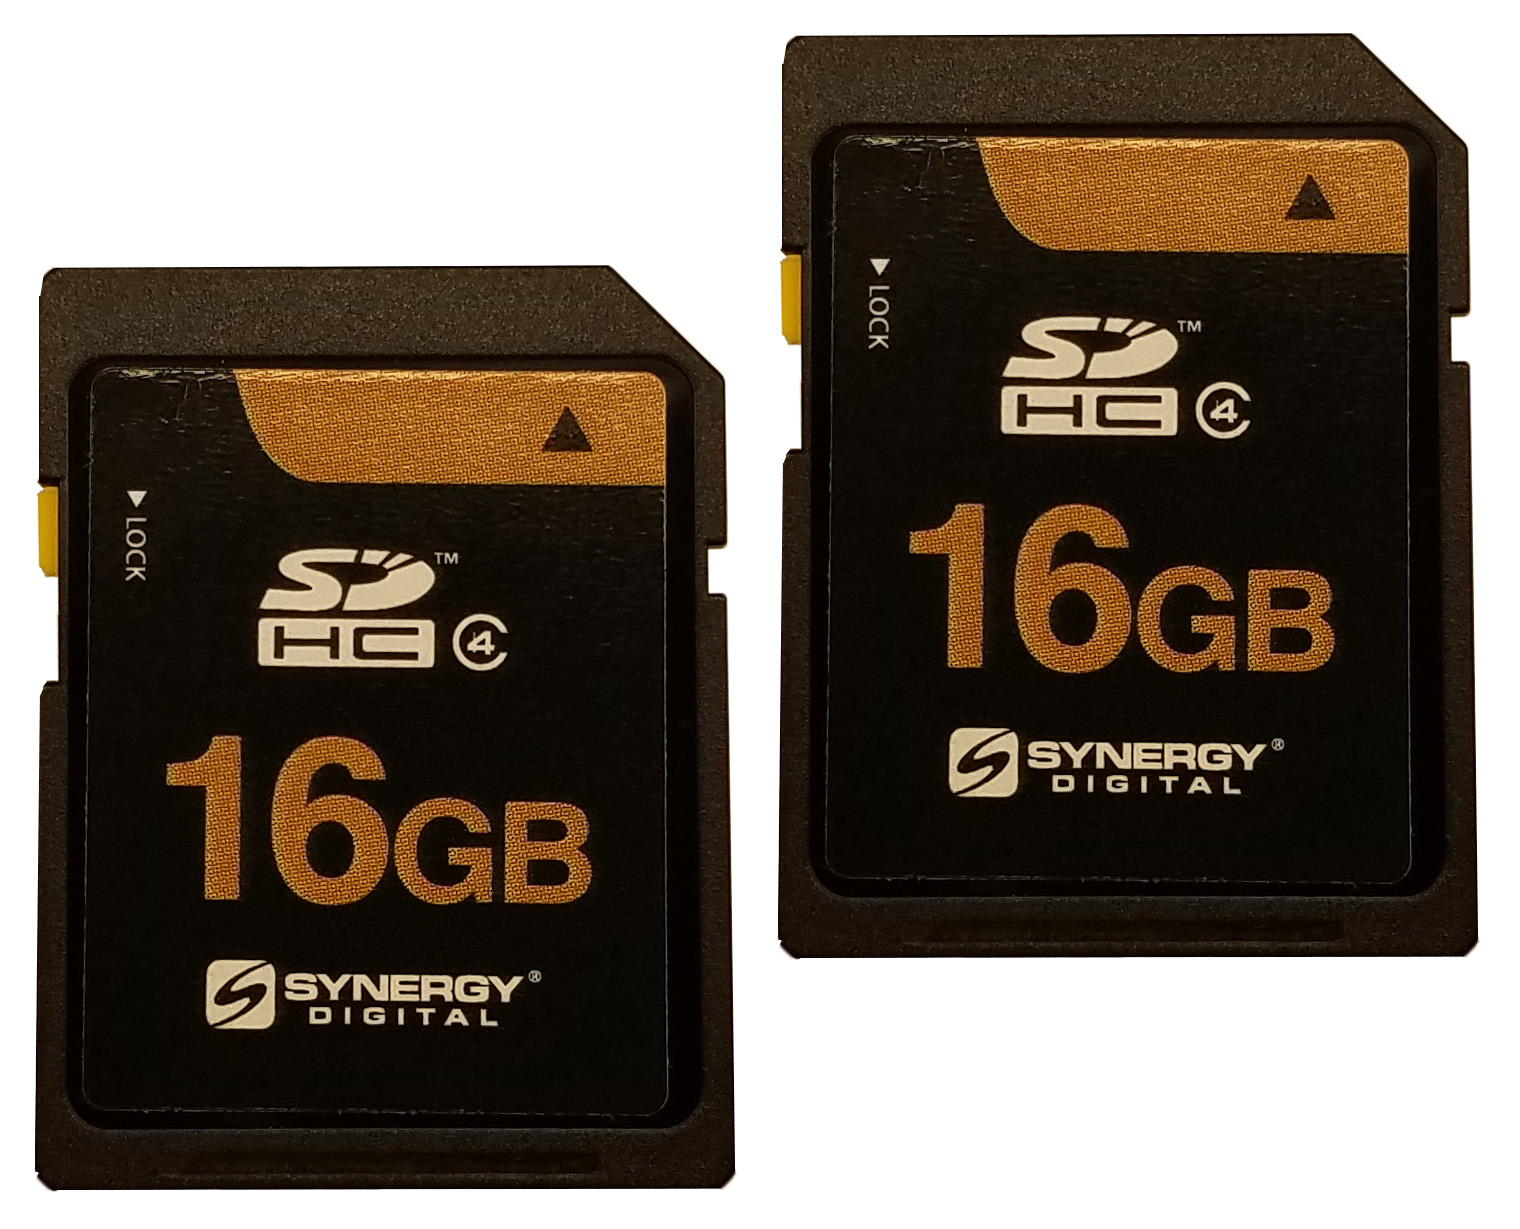 Memory Cards for Vivitar DVR426 Camcorder